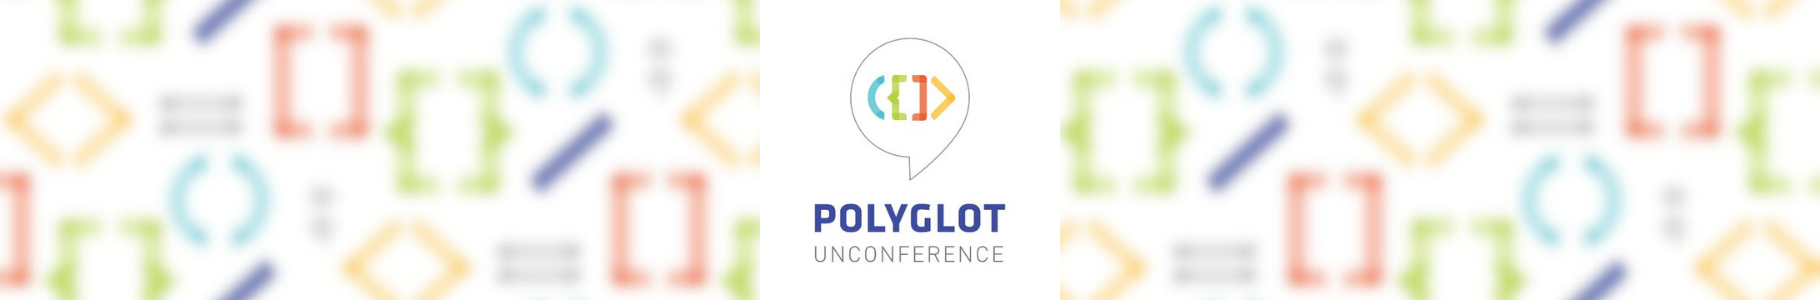 Polyglot Unconference